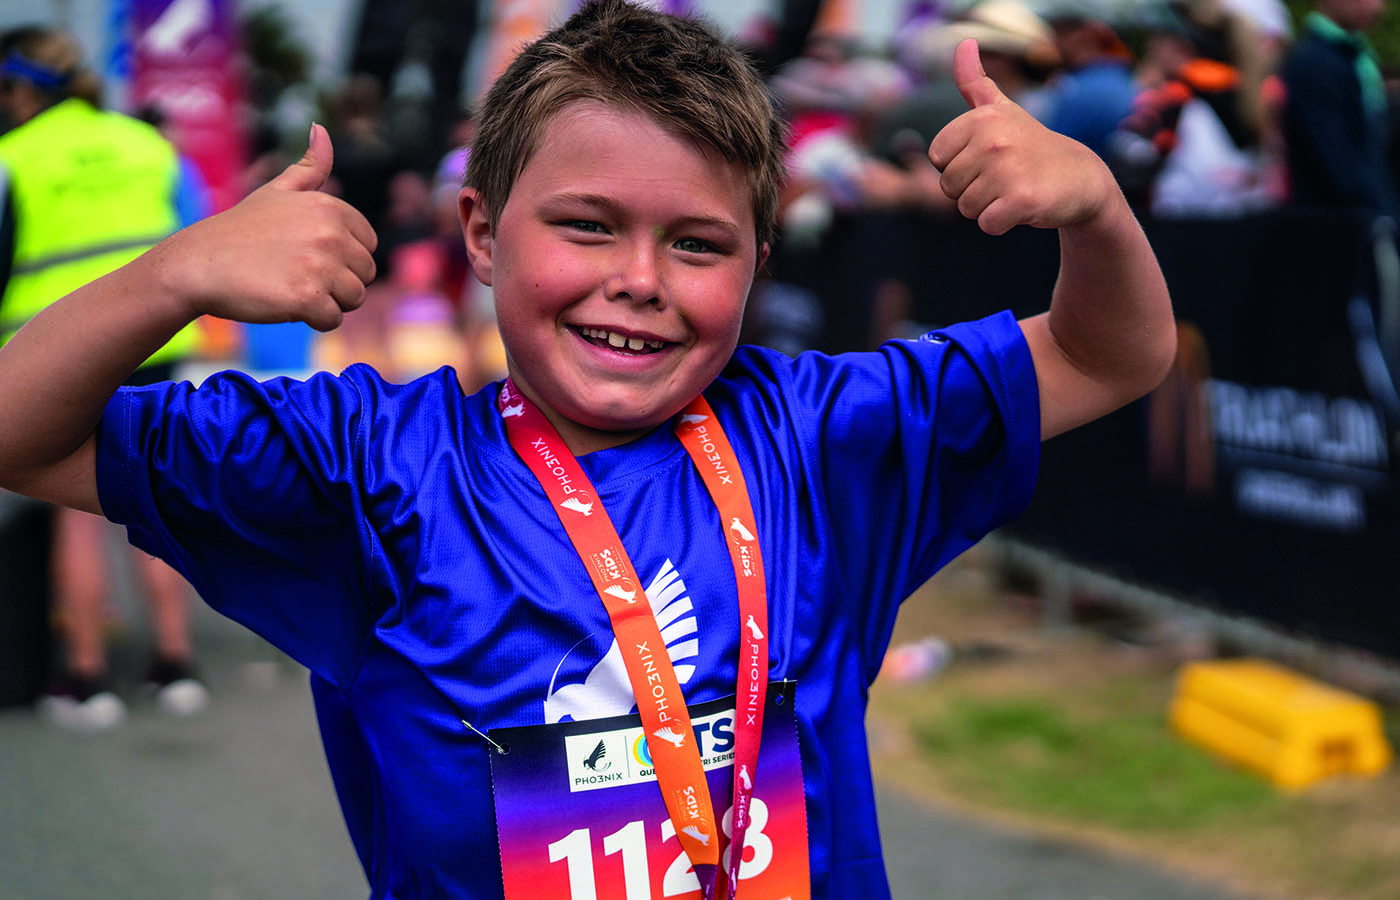 Pho3nix Foundation partners with Queensland Triathlon Series for Pho3nix Kids Triathlon by Chris McCormack